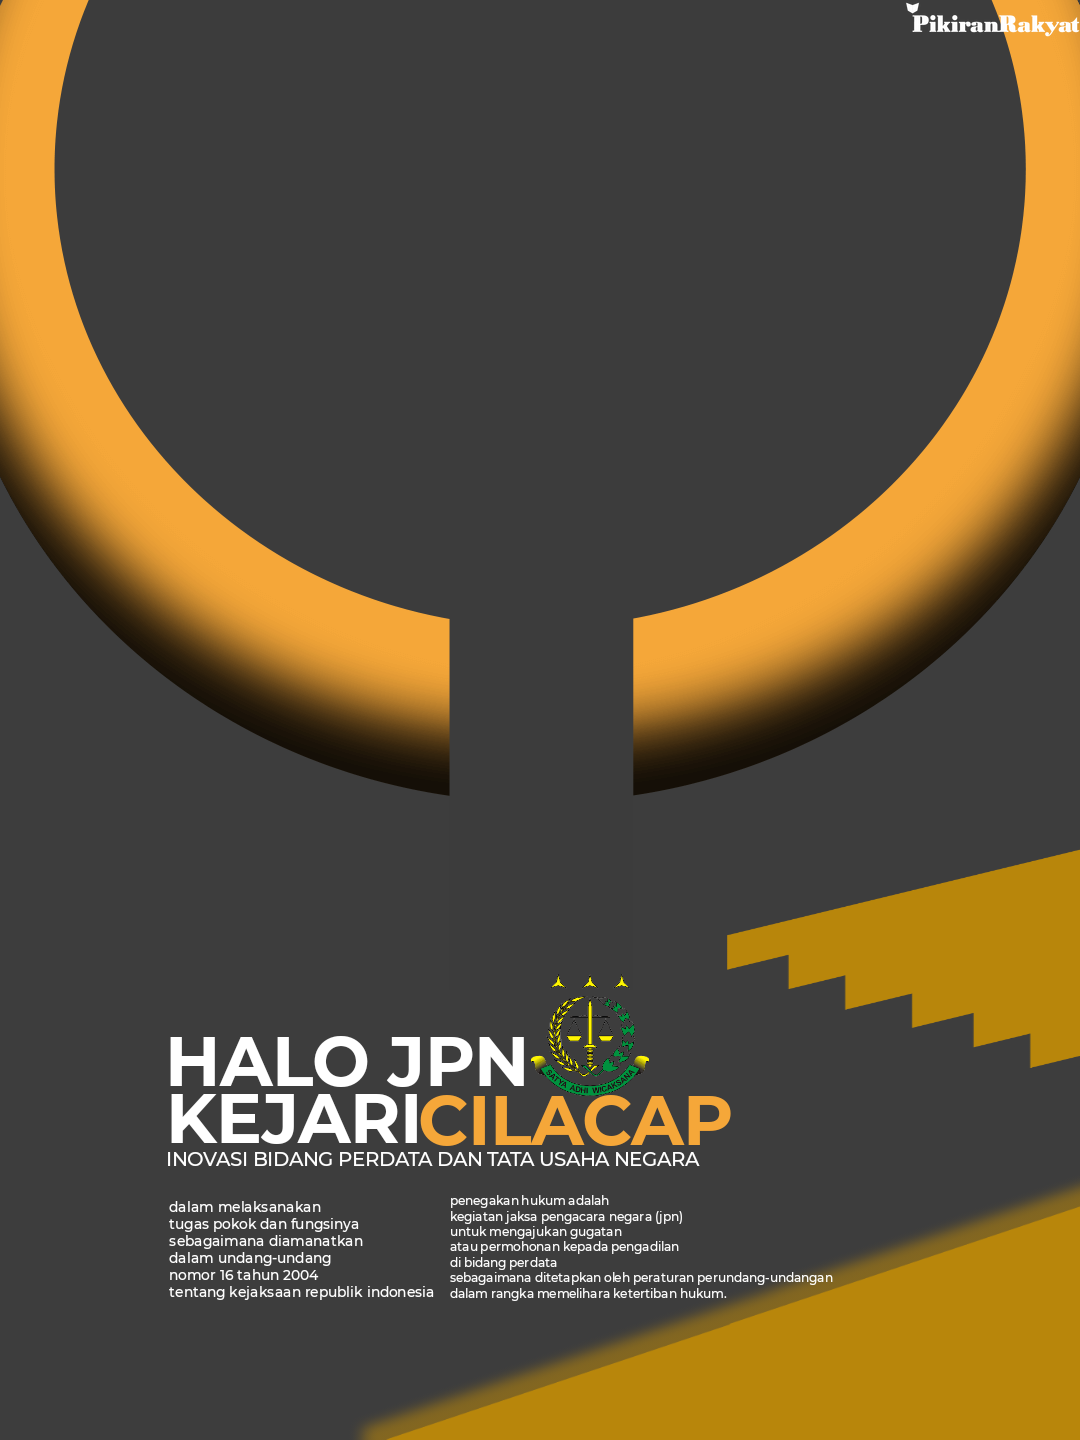 Aplikasi Halo Jaksa Pengacara negara atau Halo JPN Kejari Cilacap  yang dibangun sebagai bentuk laya/Kharisma Muhammadiyah/